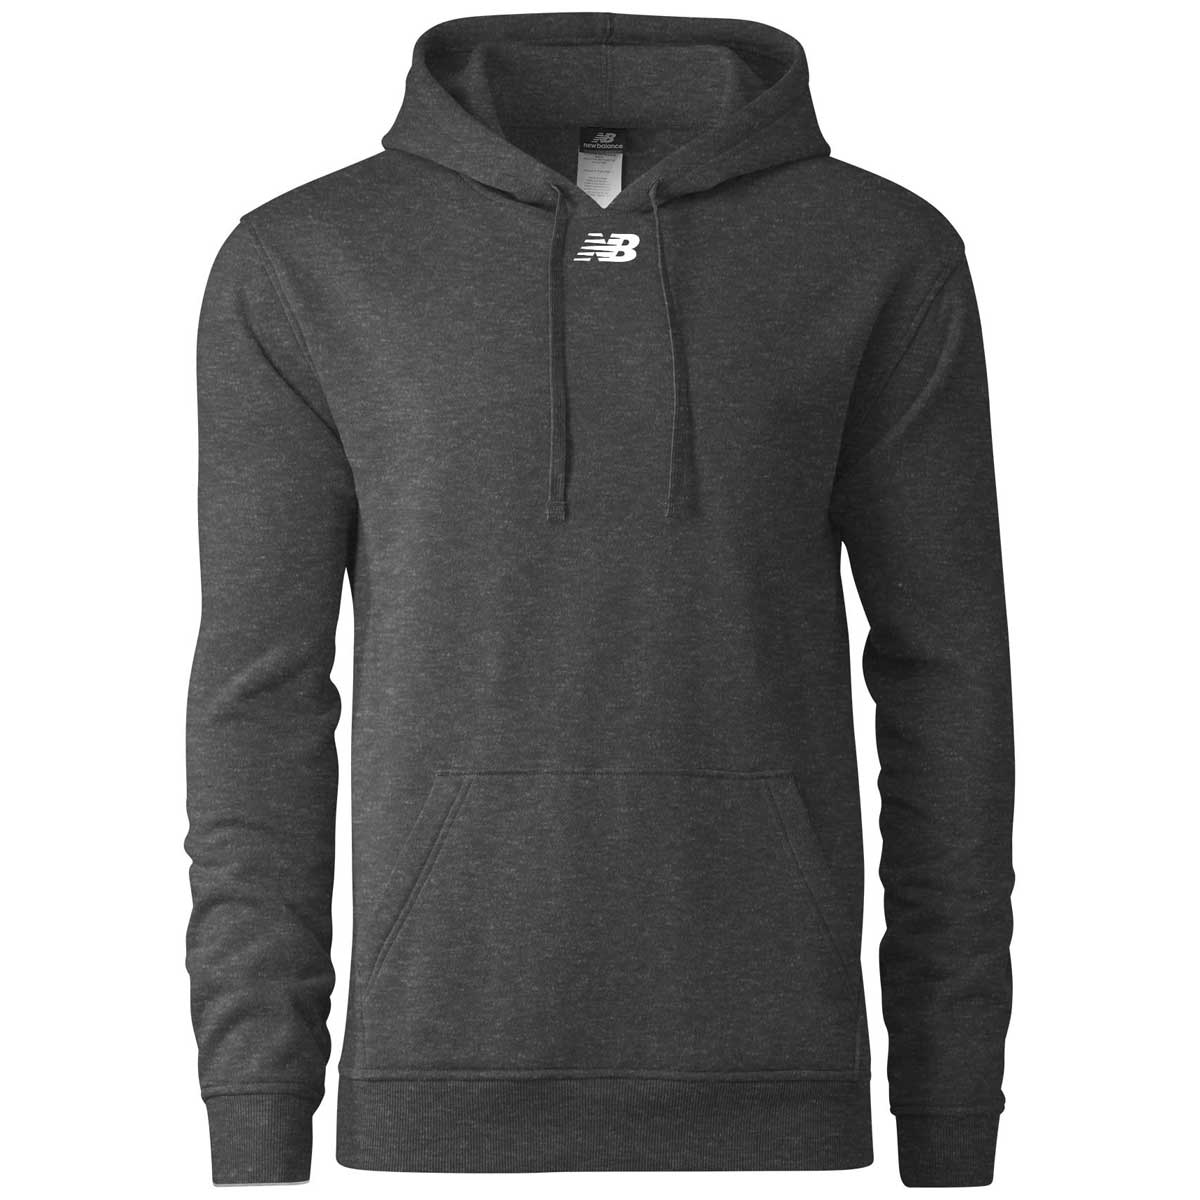 A grey custom embroidered New Balance hoodies and sweatshirts